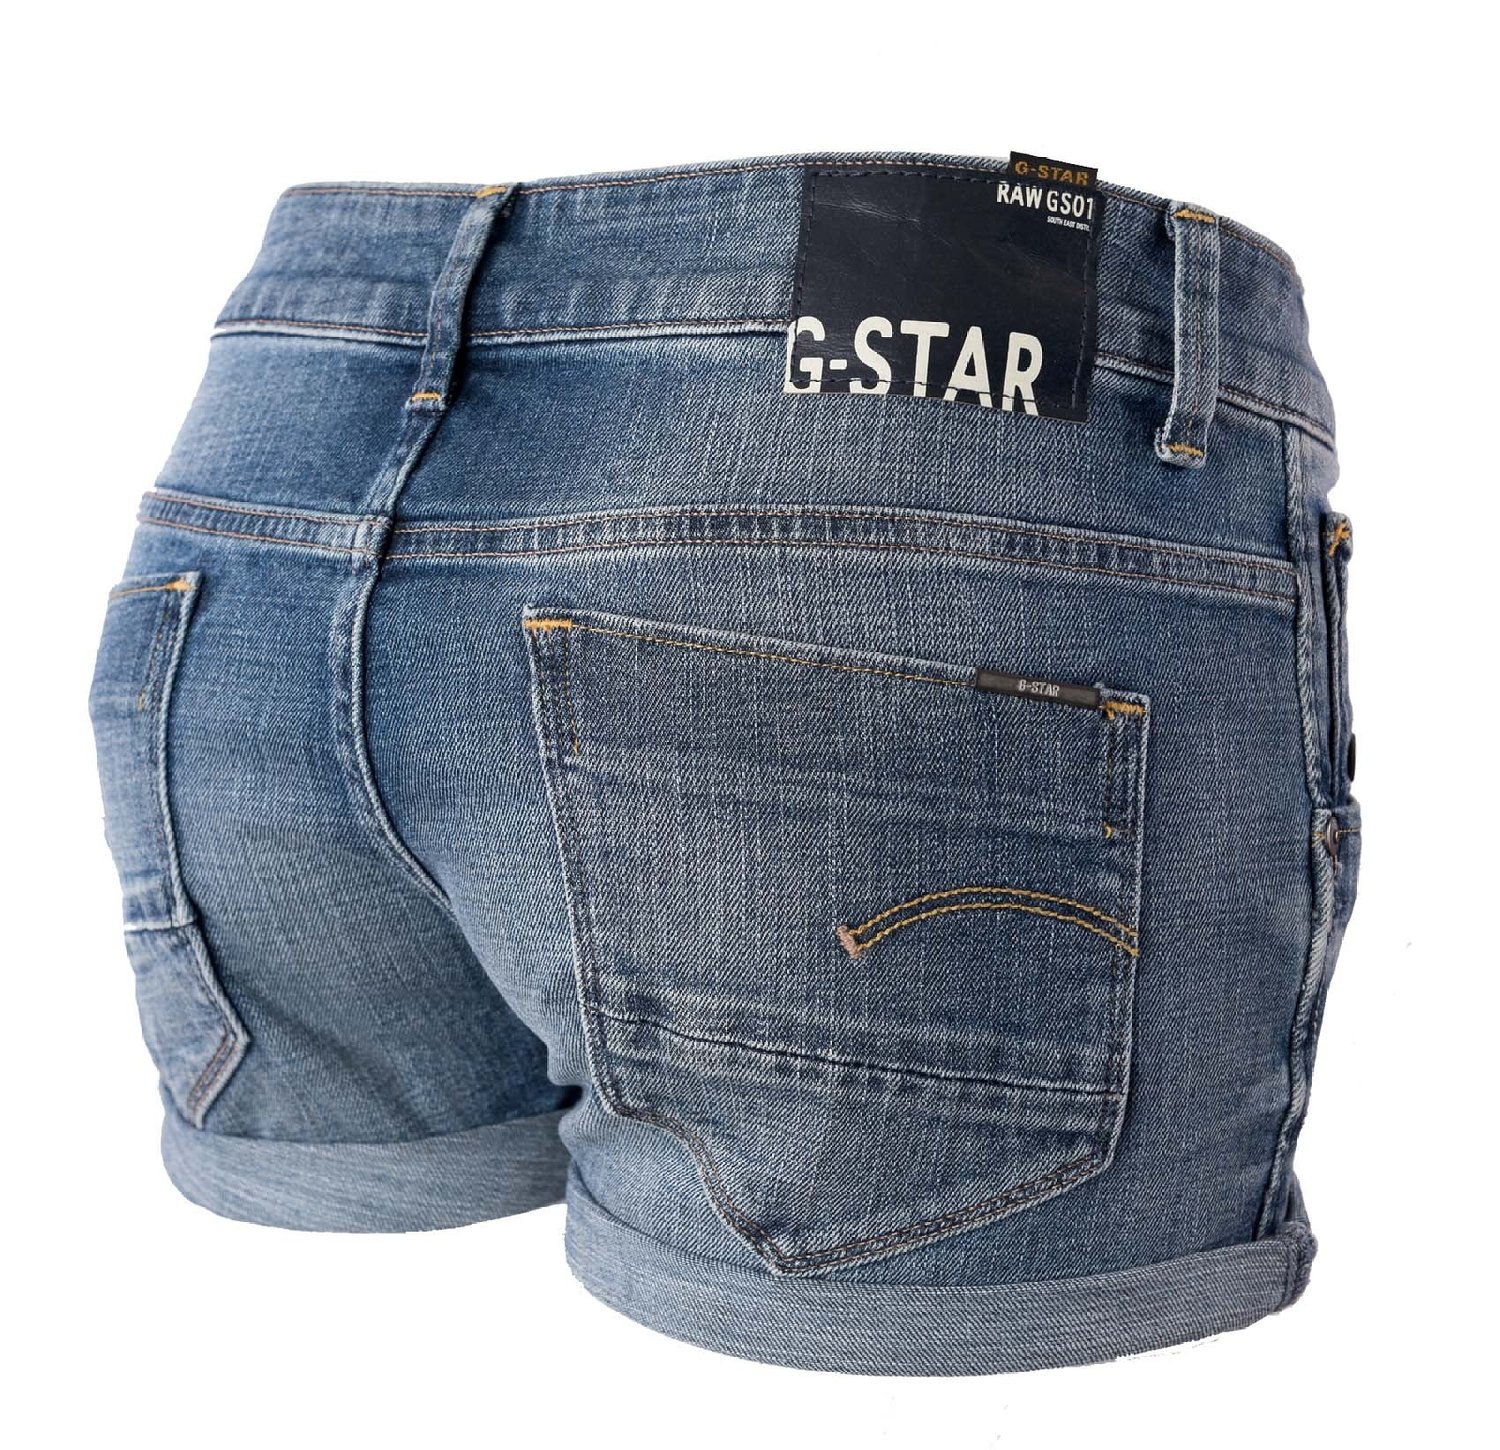 g star raw denim shorts